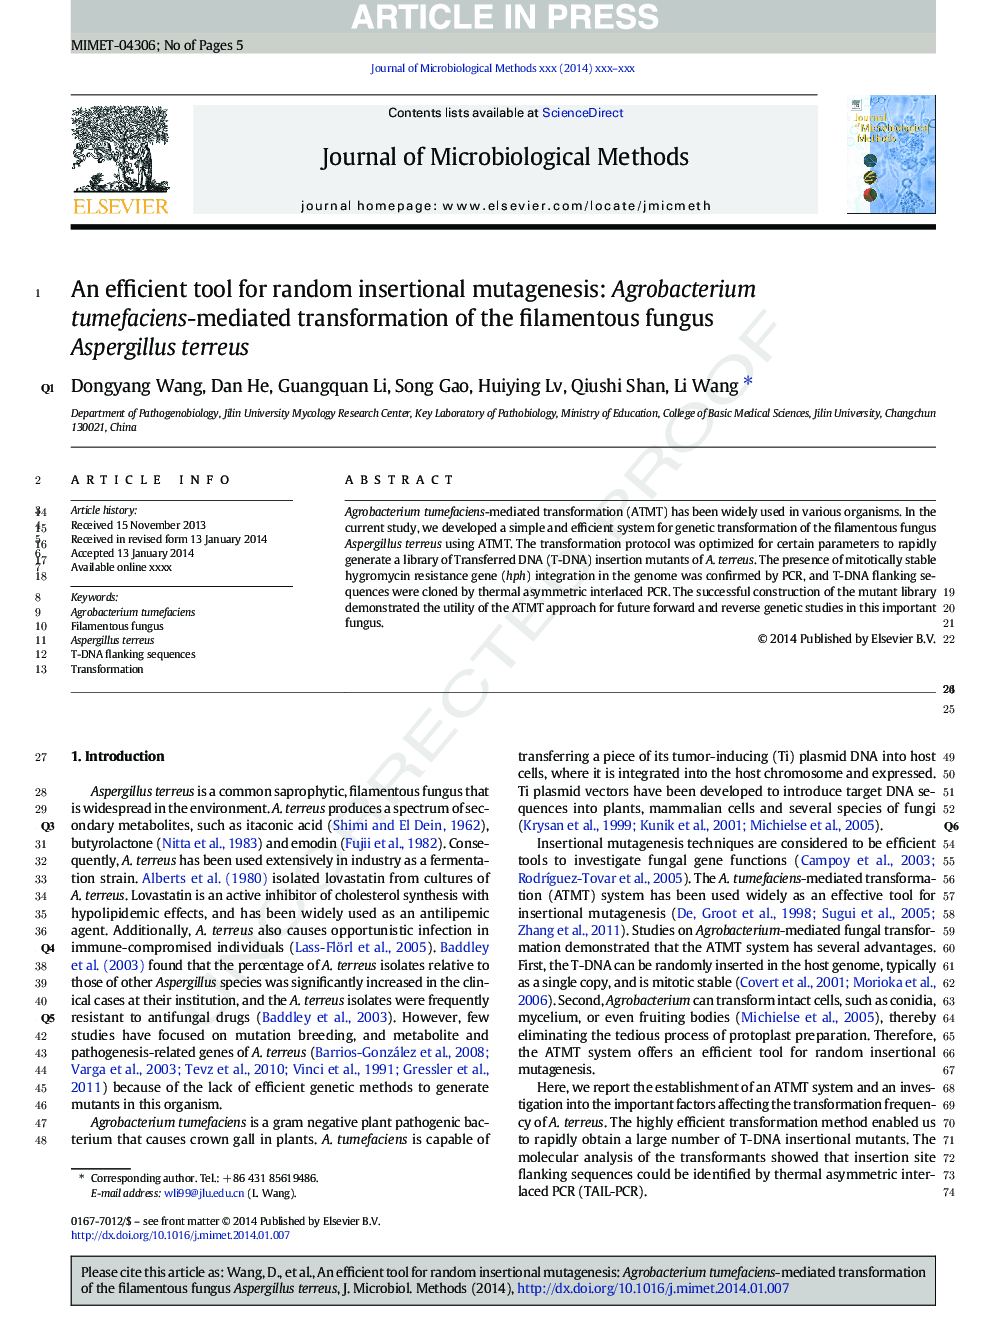 An efficient tool for random insertional mutagenesis: Agrobacterium tumefaciens-mediated transformation of the filamentous fungus Aspergillus terreus